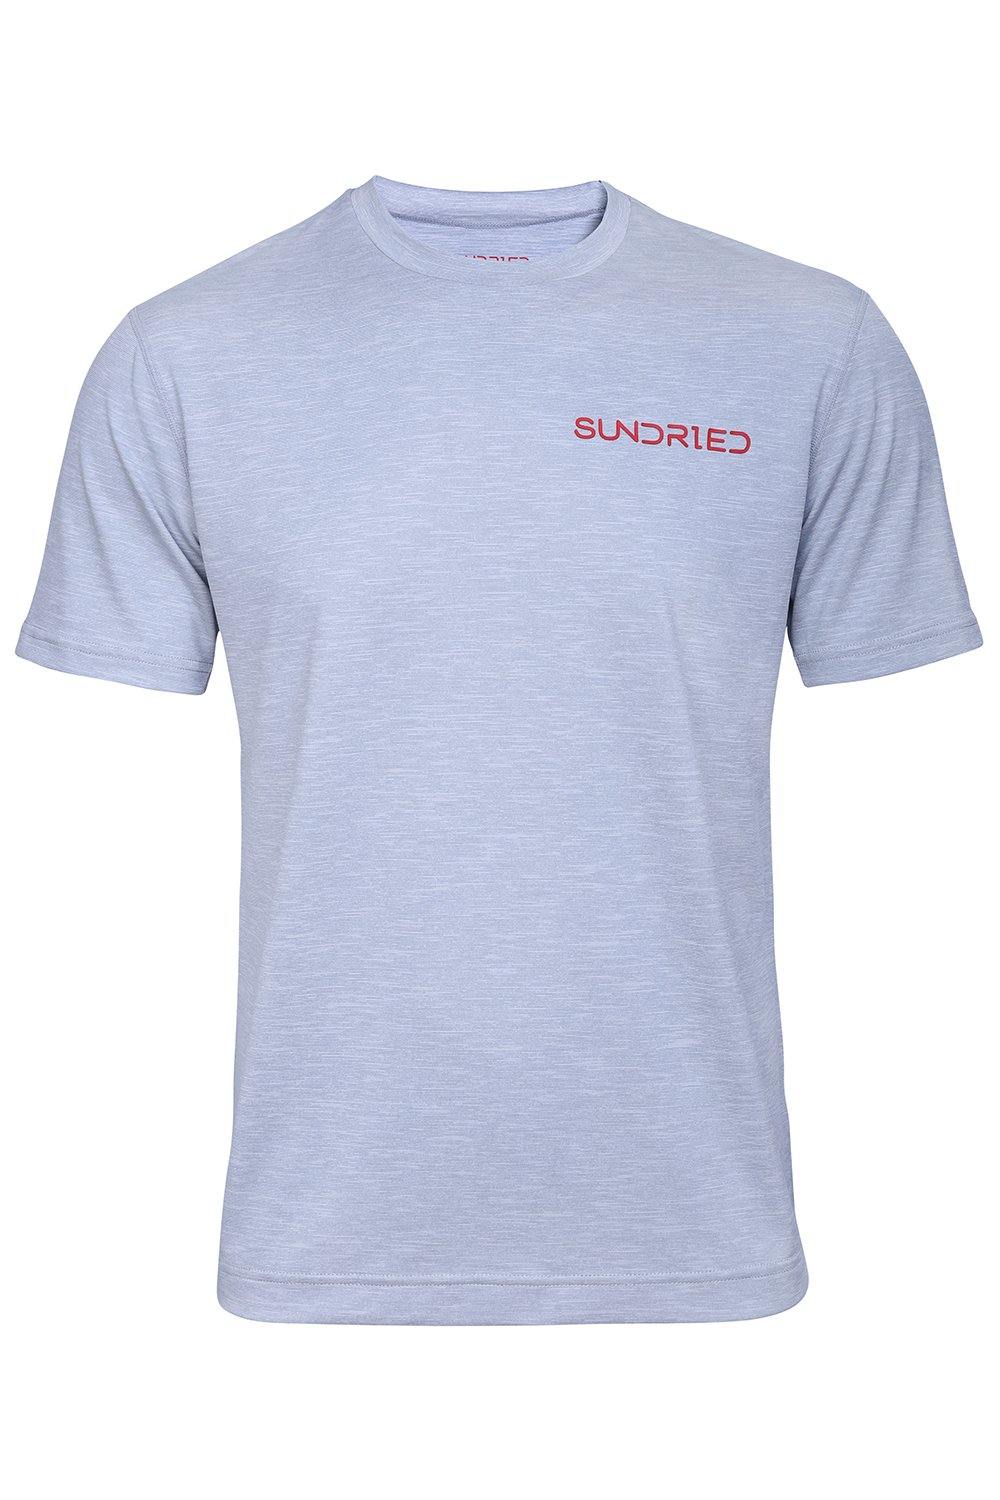 Sundried Olperer Men's T-Shirt T-Shirt S SD0025 S Grey Activewear